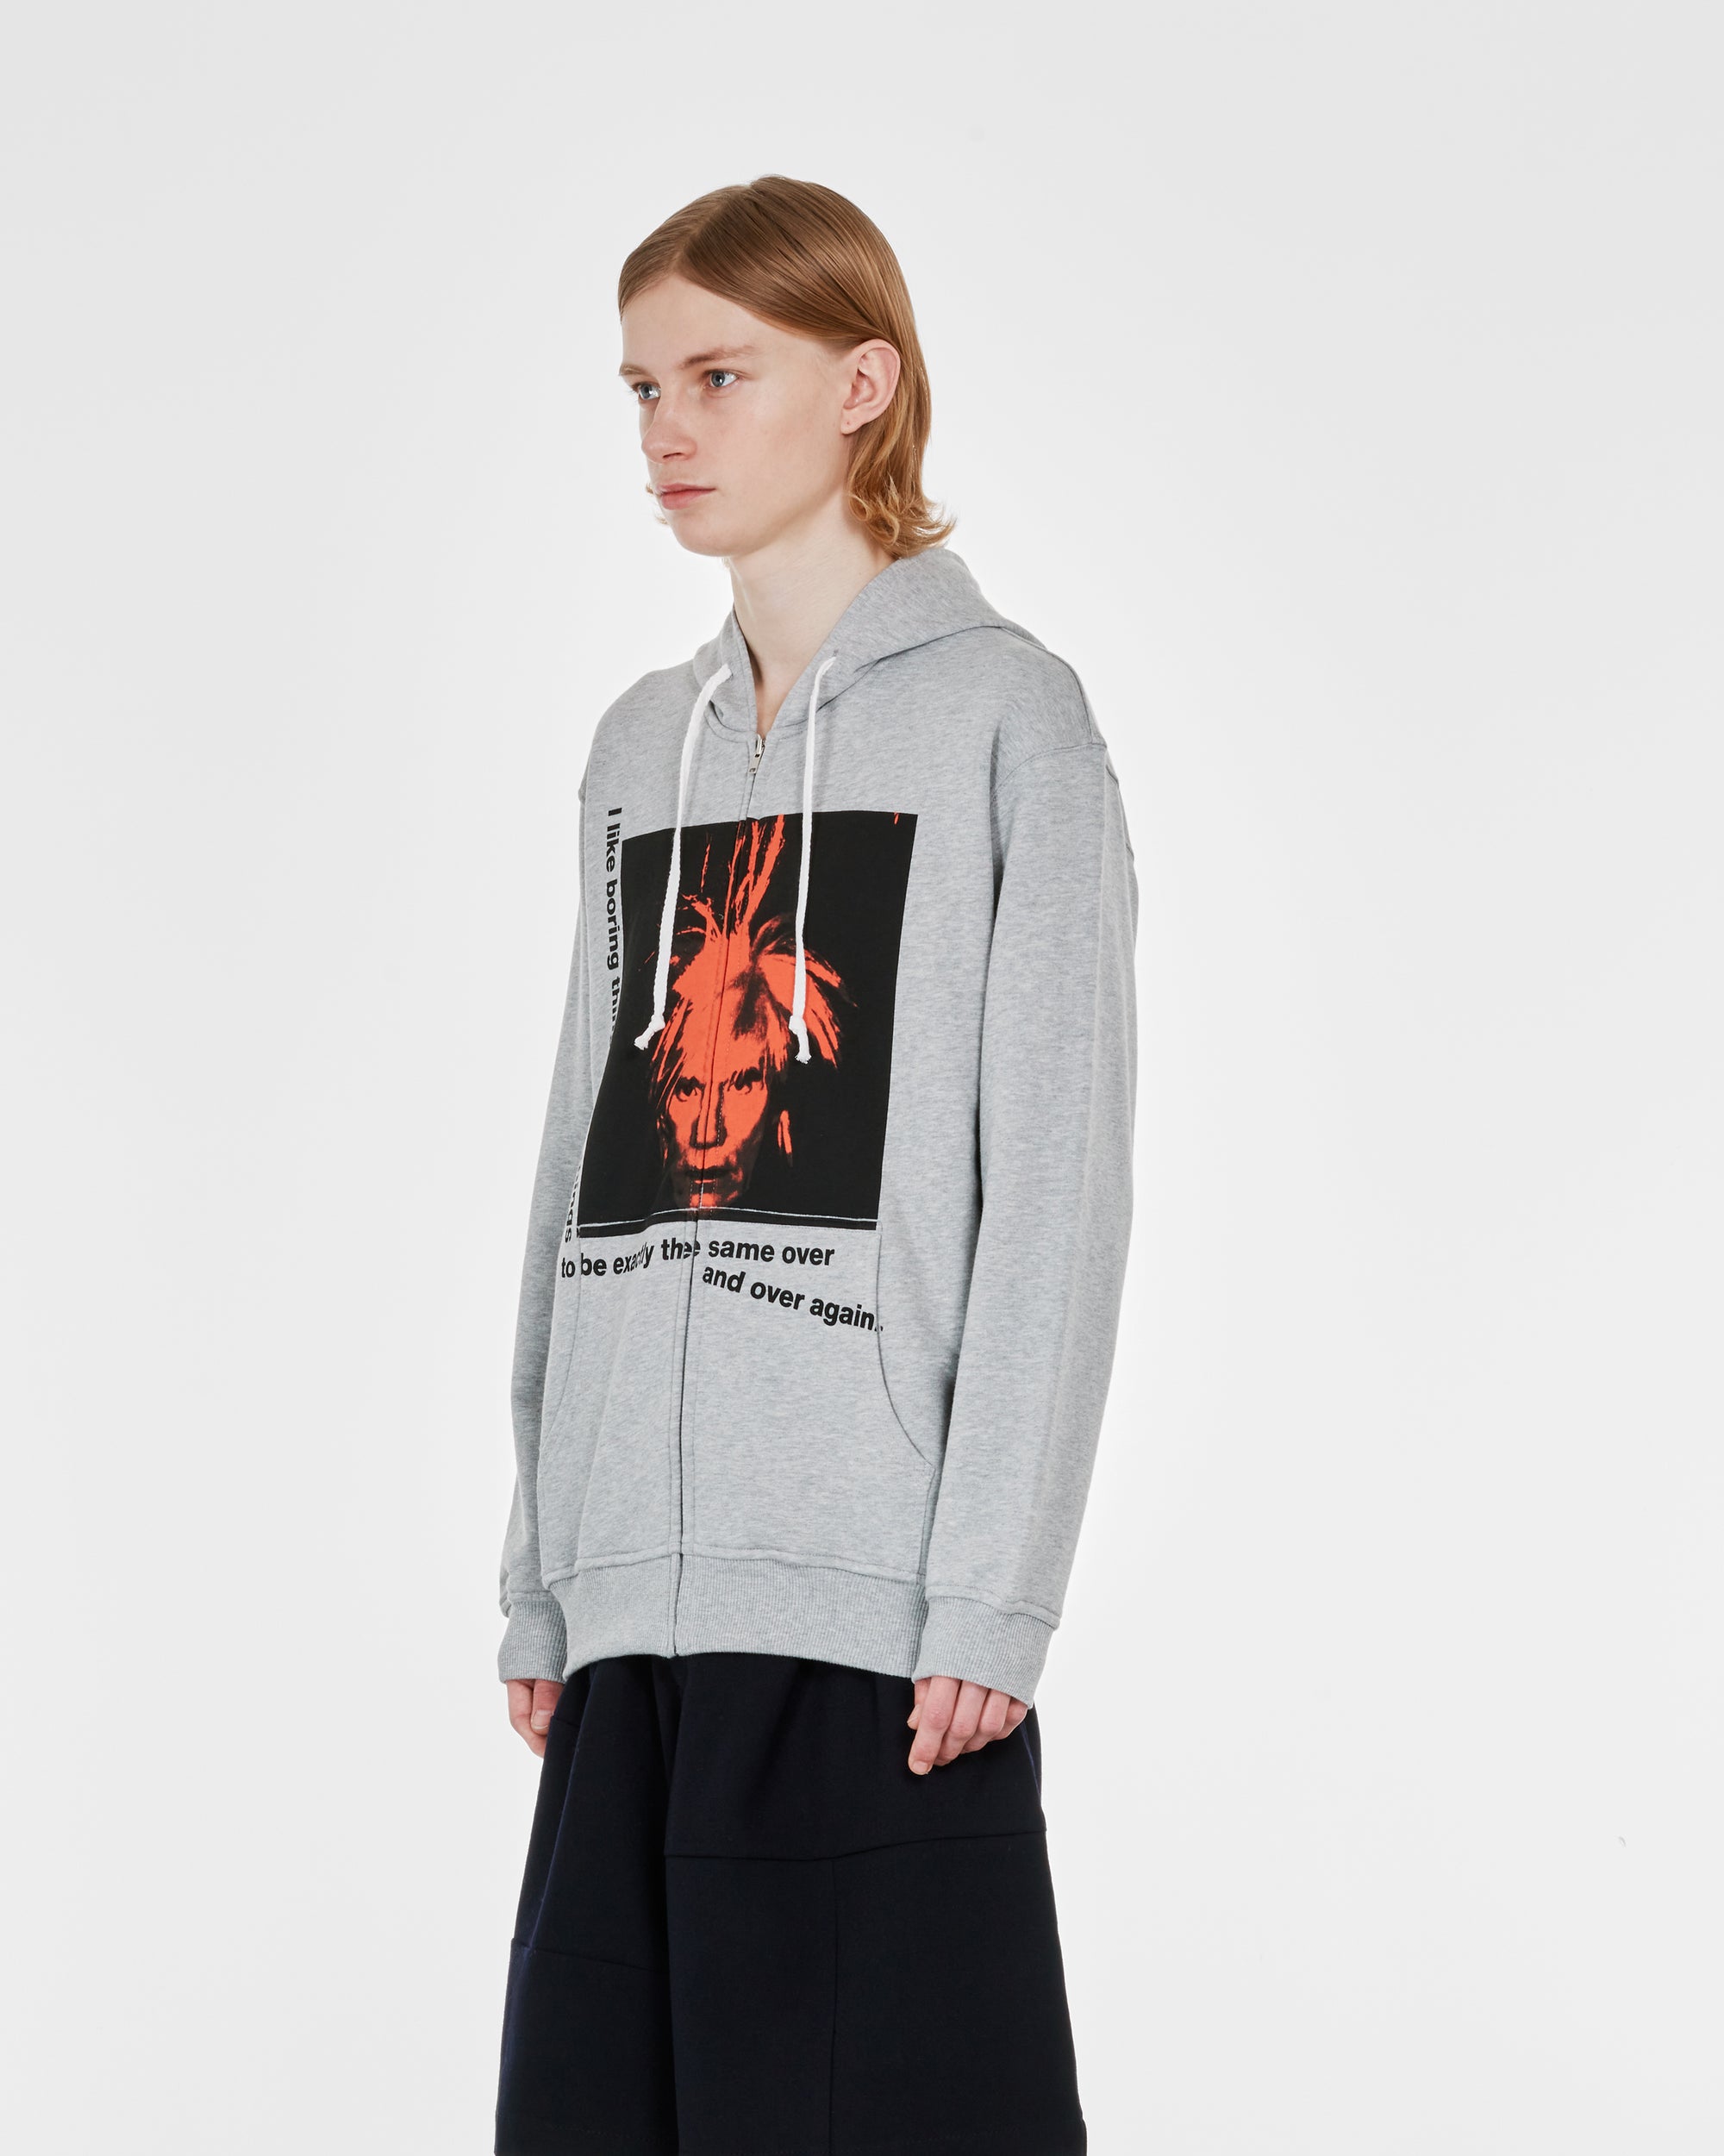 CDG Shirt - Andy Warhol Men's Hooded Sweatshirt - (Grey/Print J) view 3